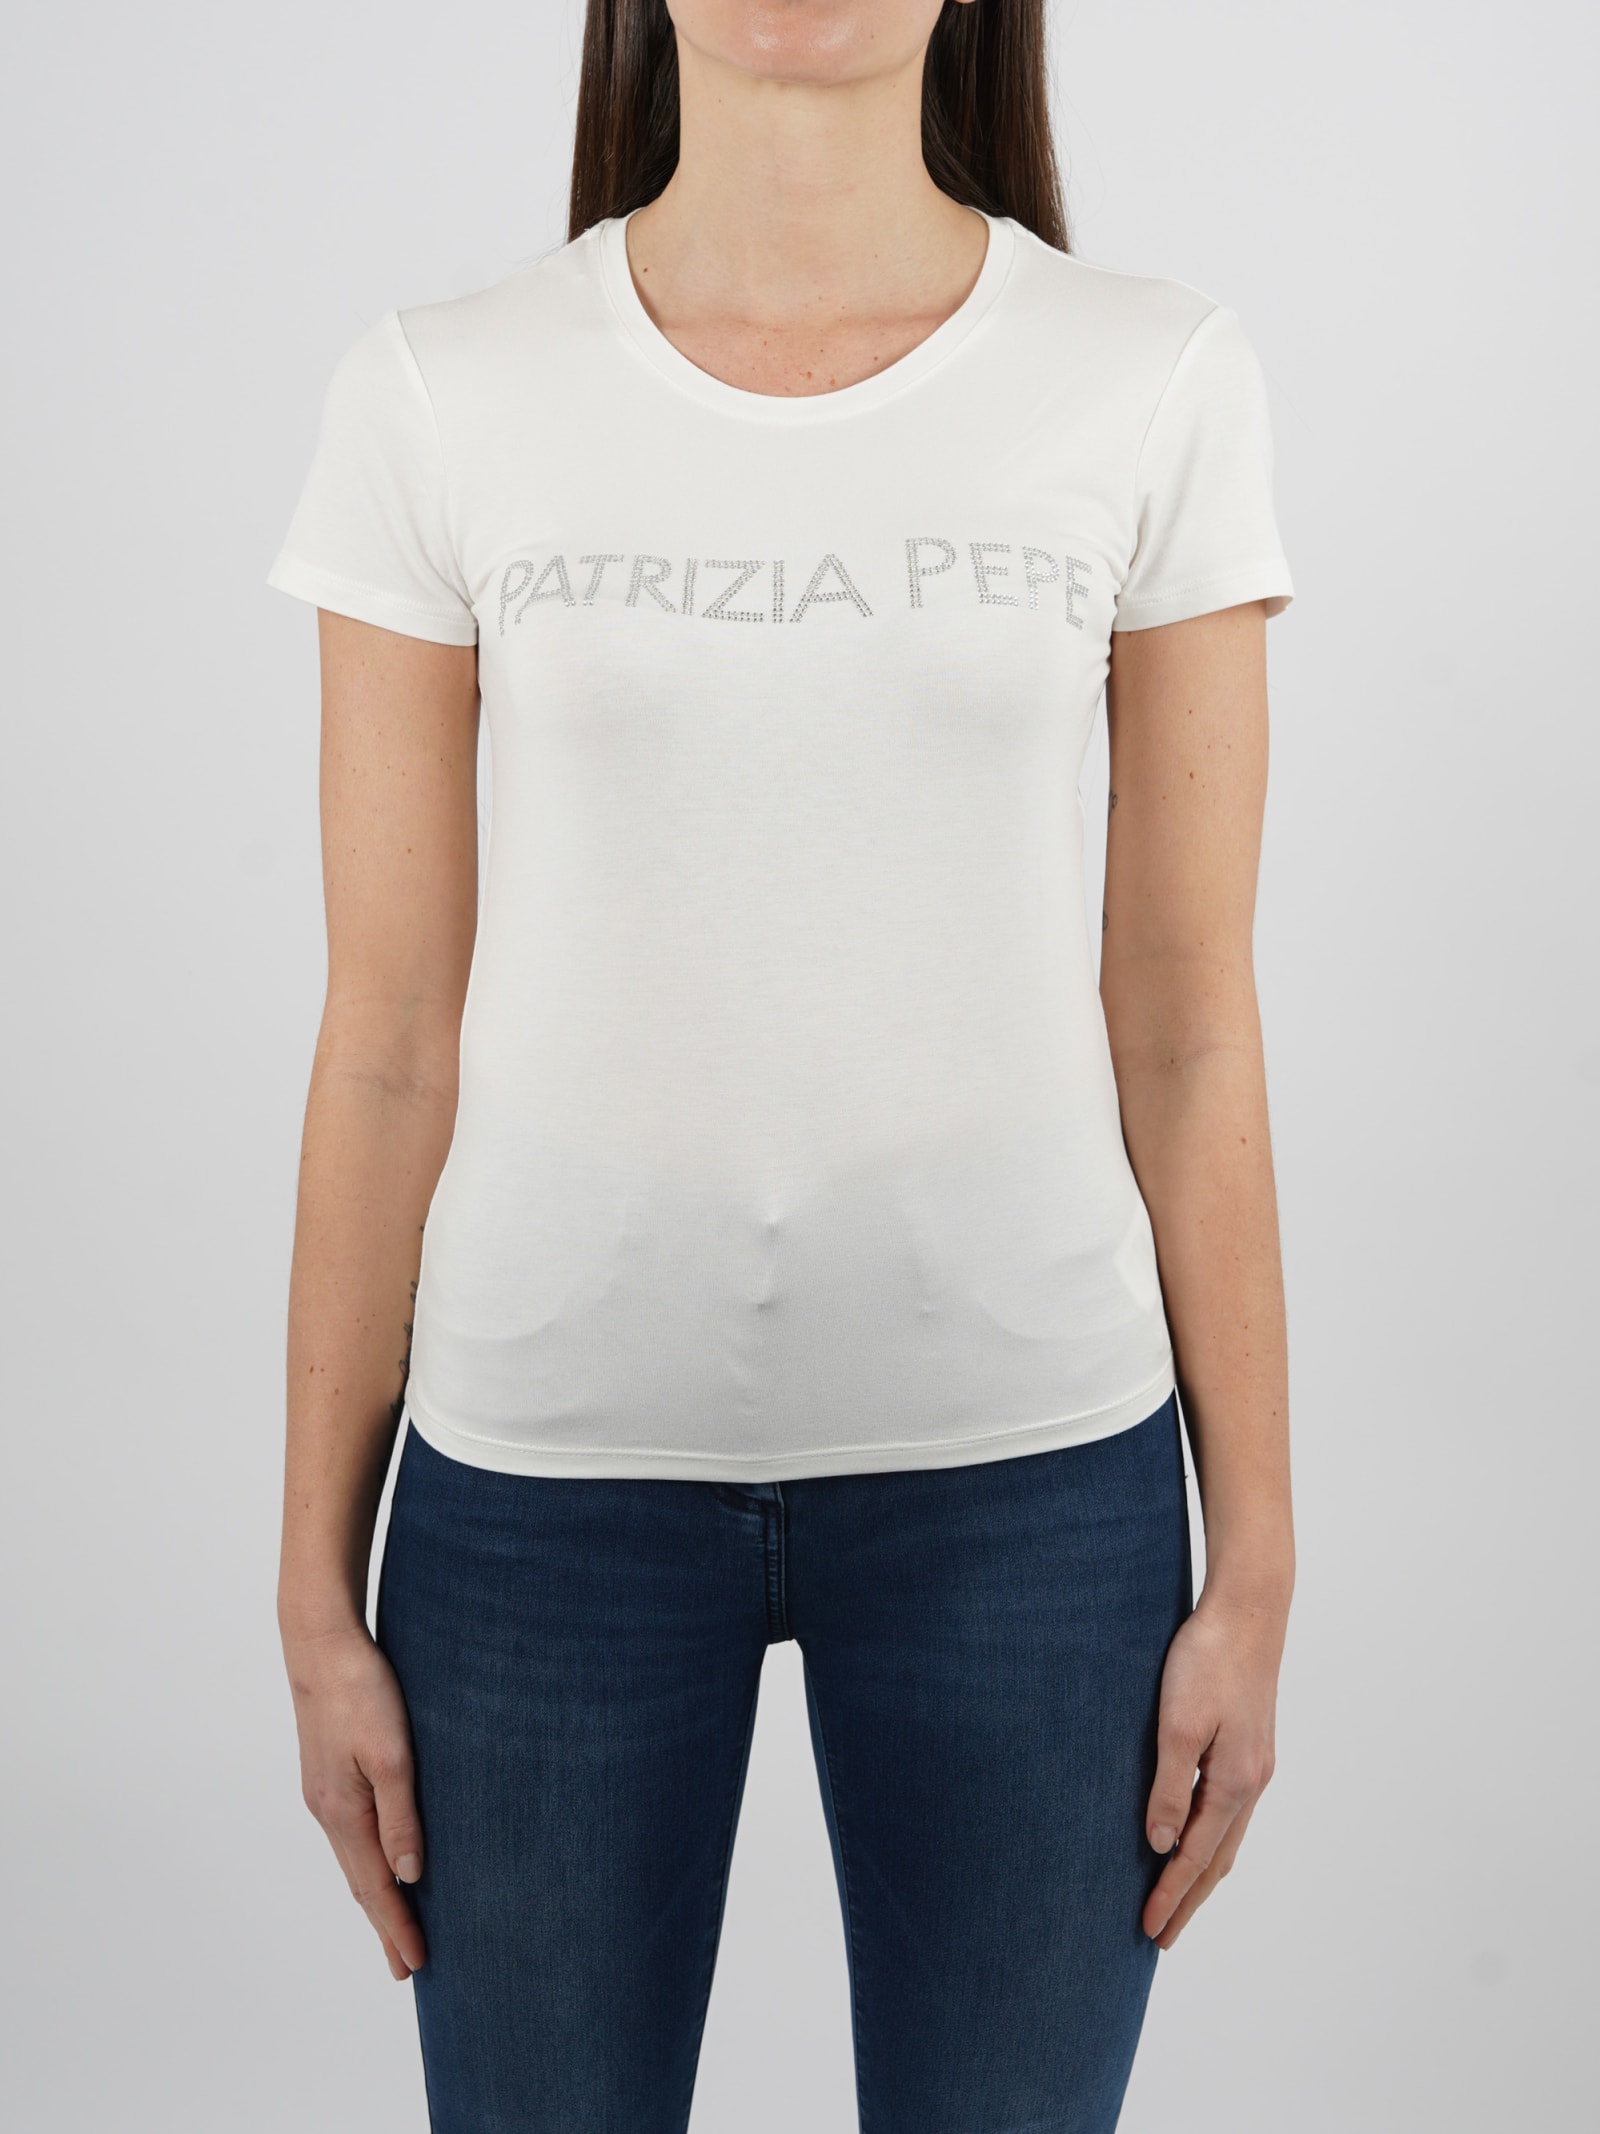 Patrizia Pepe Viscosa Stretch T-shirt